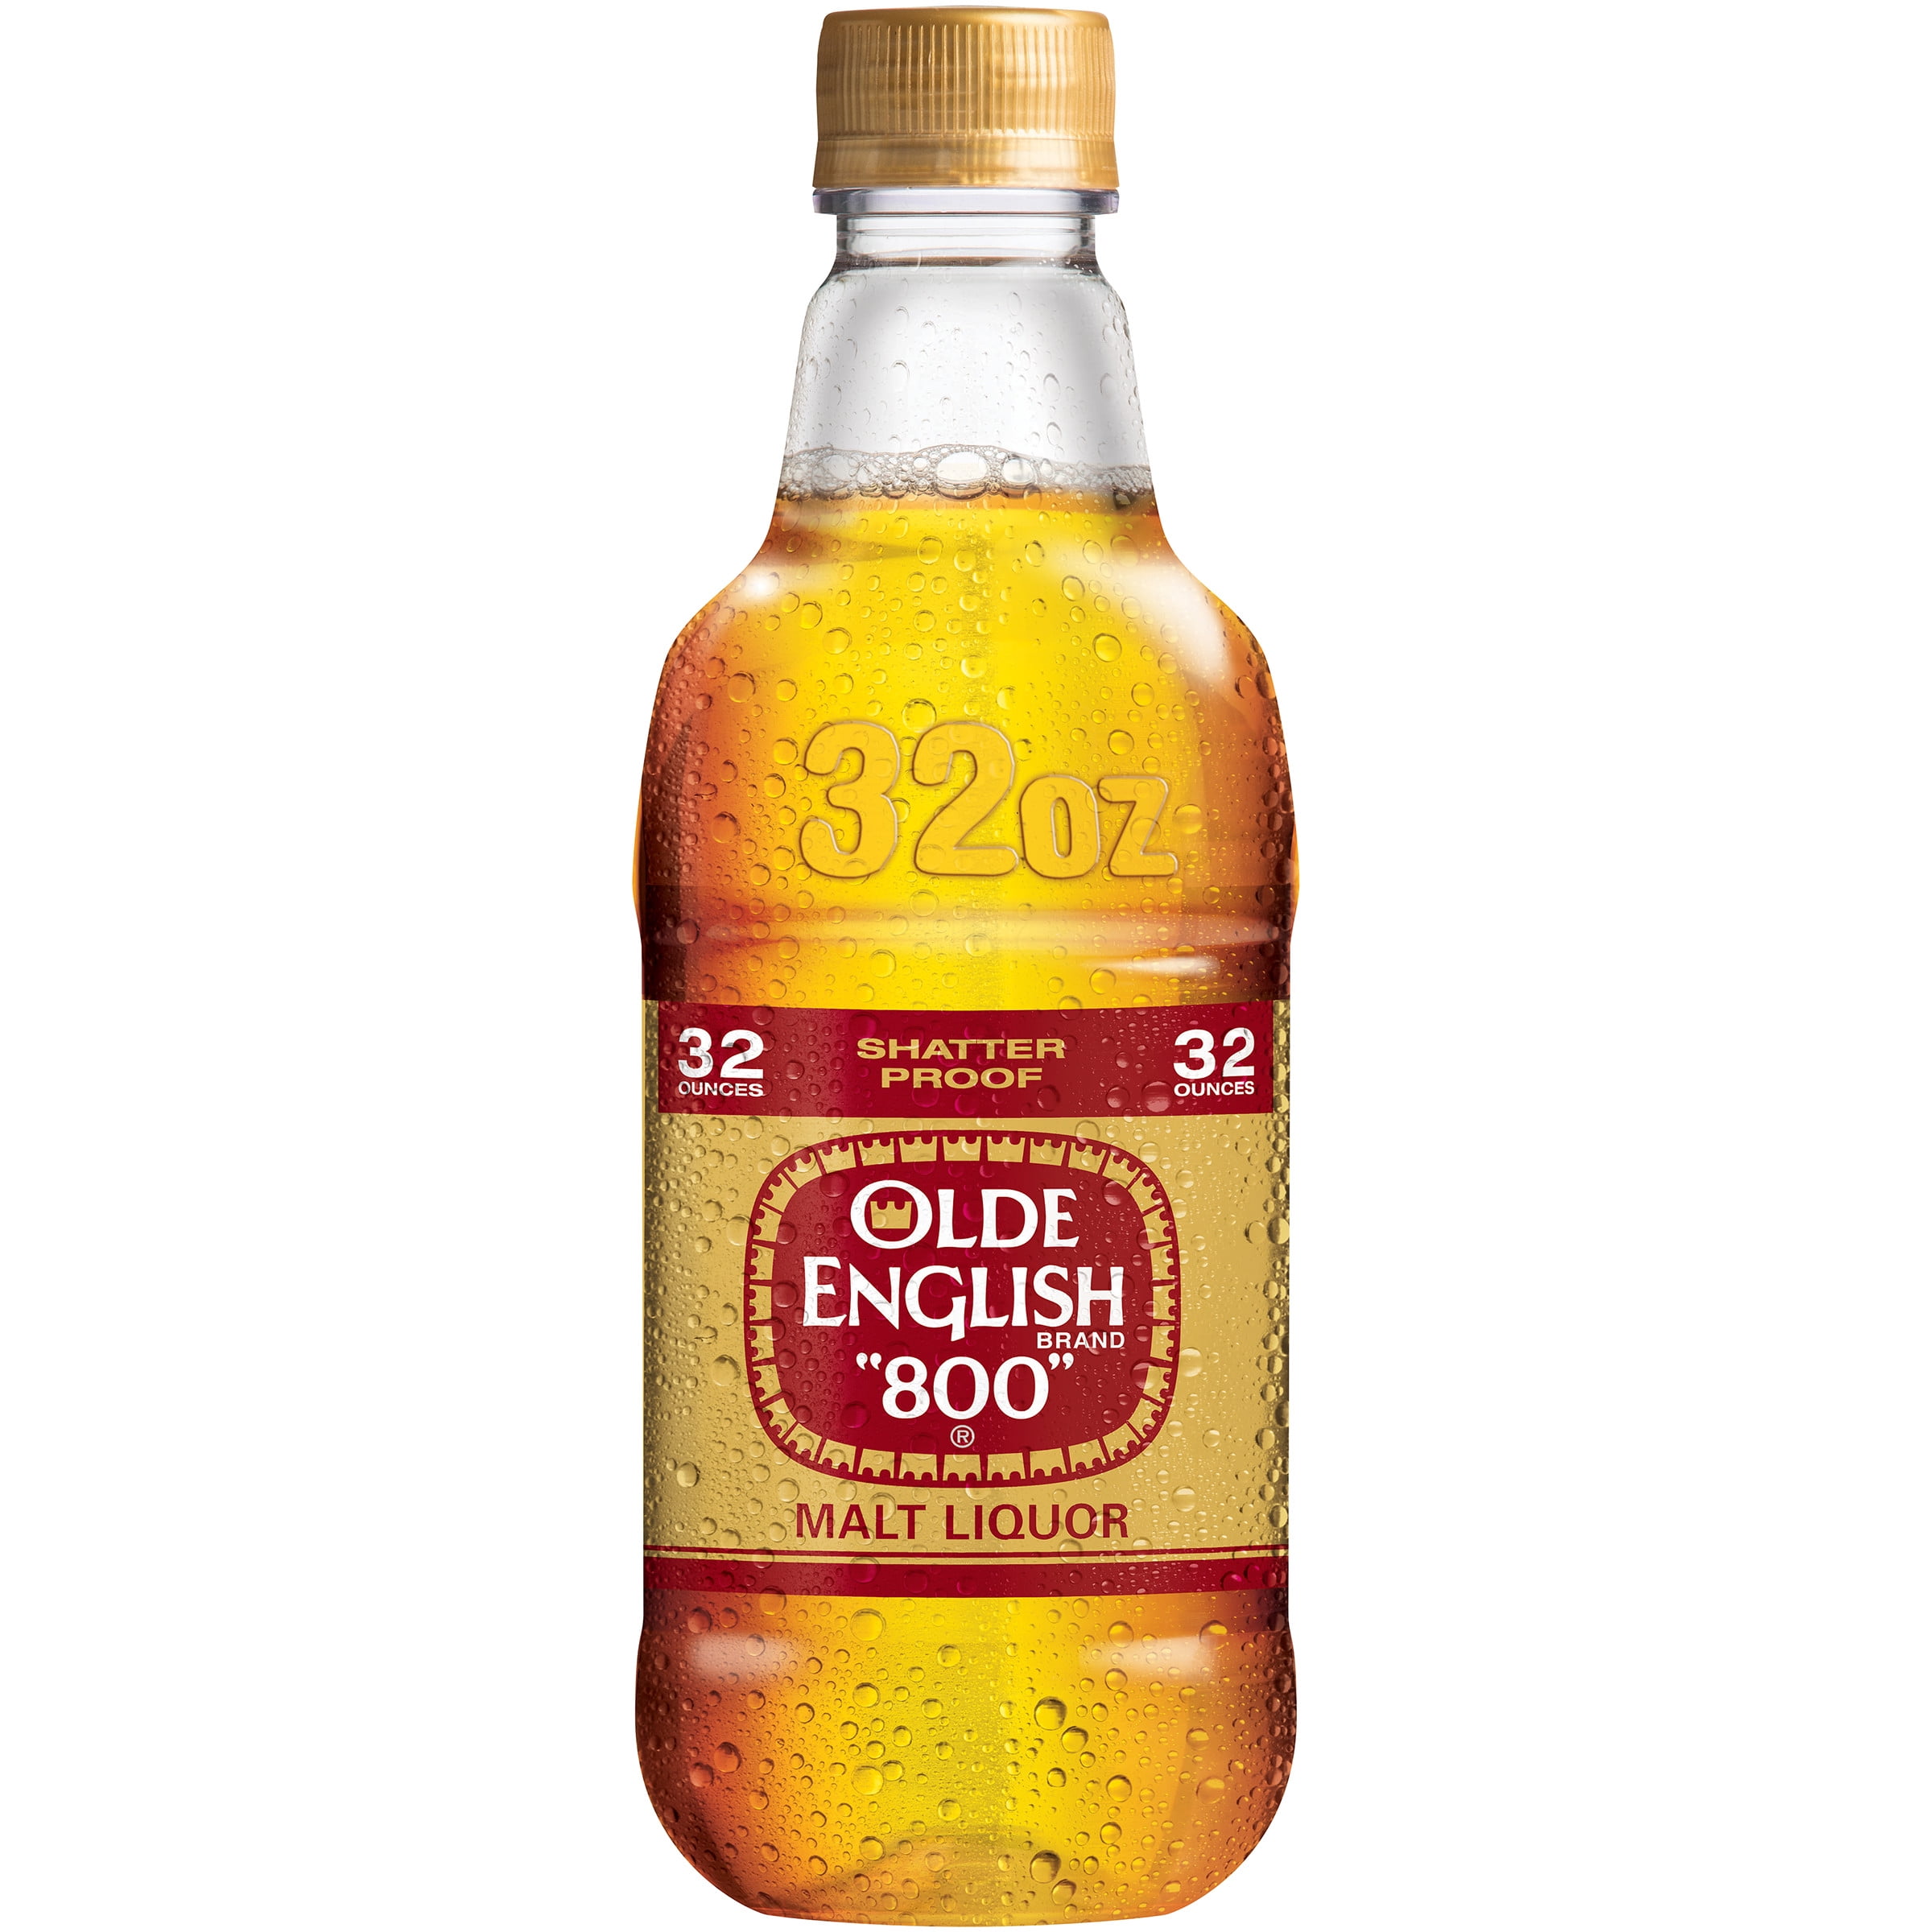 Olde English 800 Malt Liquor. Malt Liquor - Olde English brand 800. Old English пиво. Menace 800 Malt Liquor. Go old english